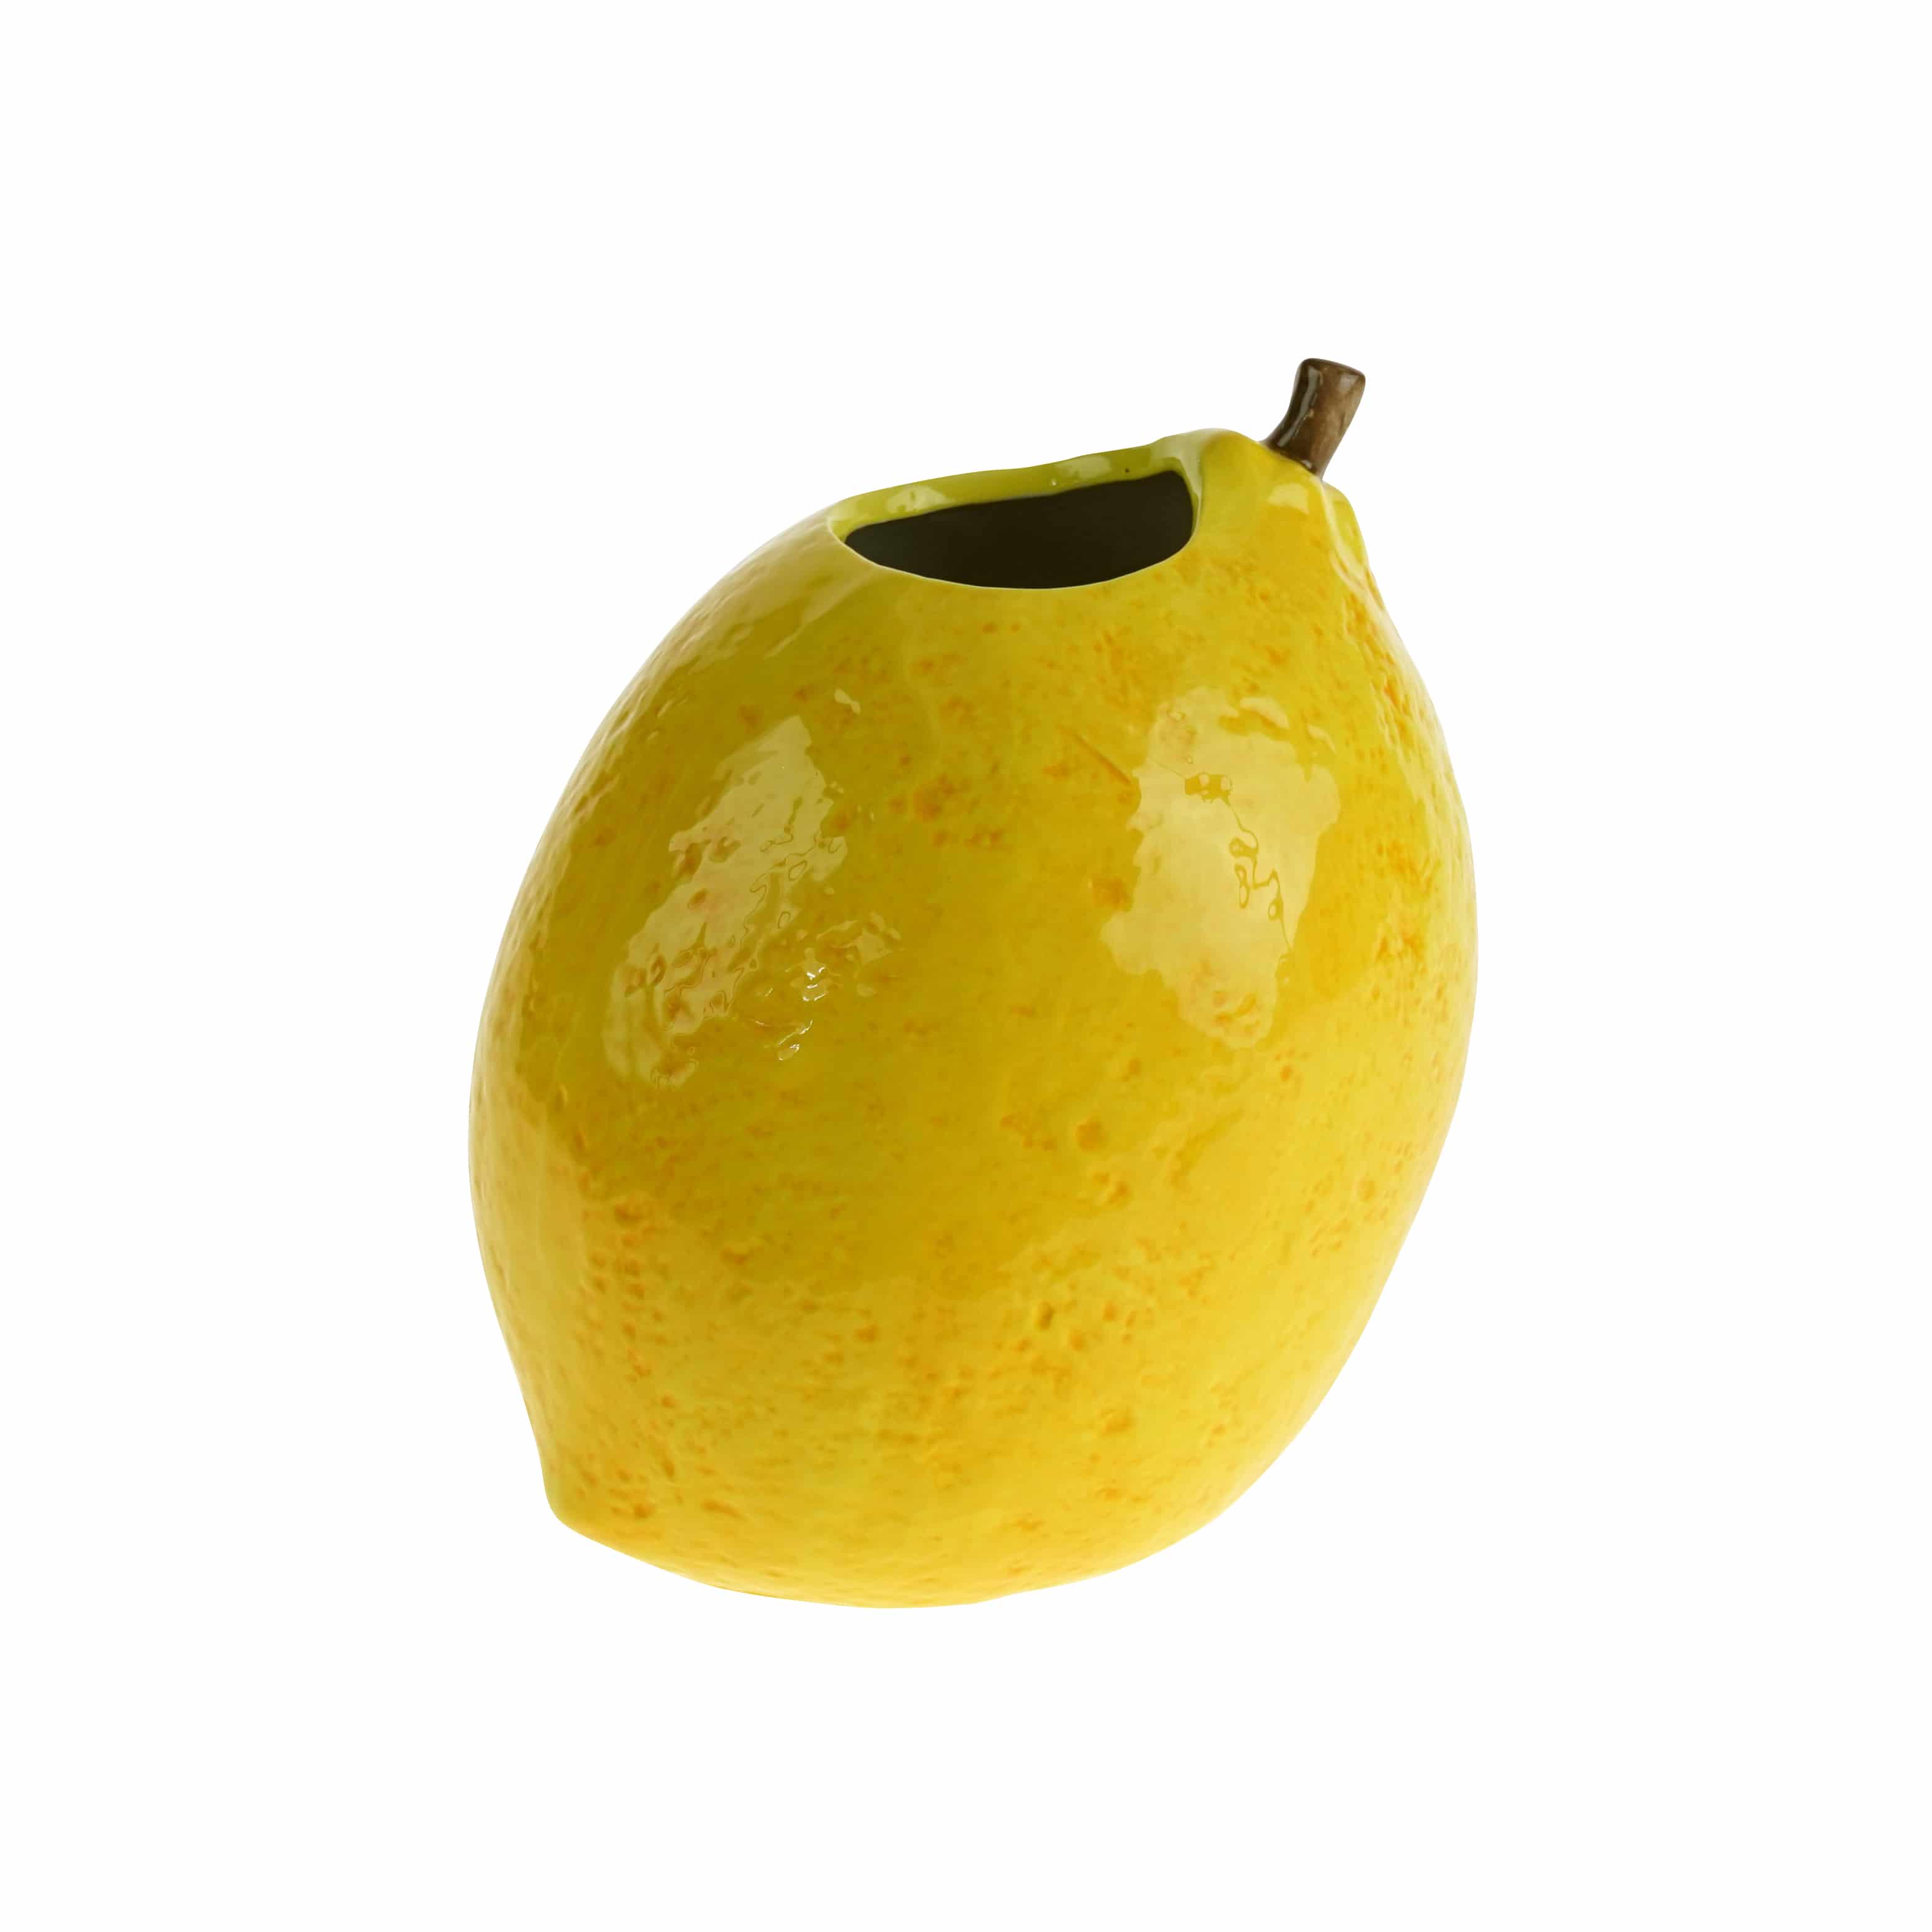 Vase Lemon in Zitronenform, gelb, Keramik, glasiert